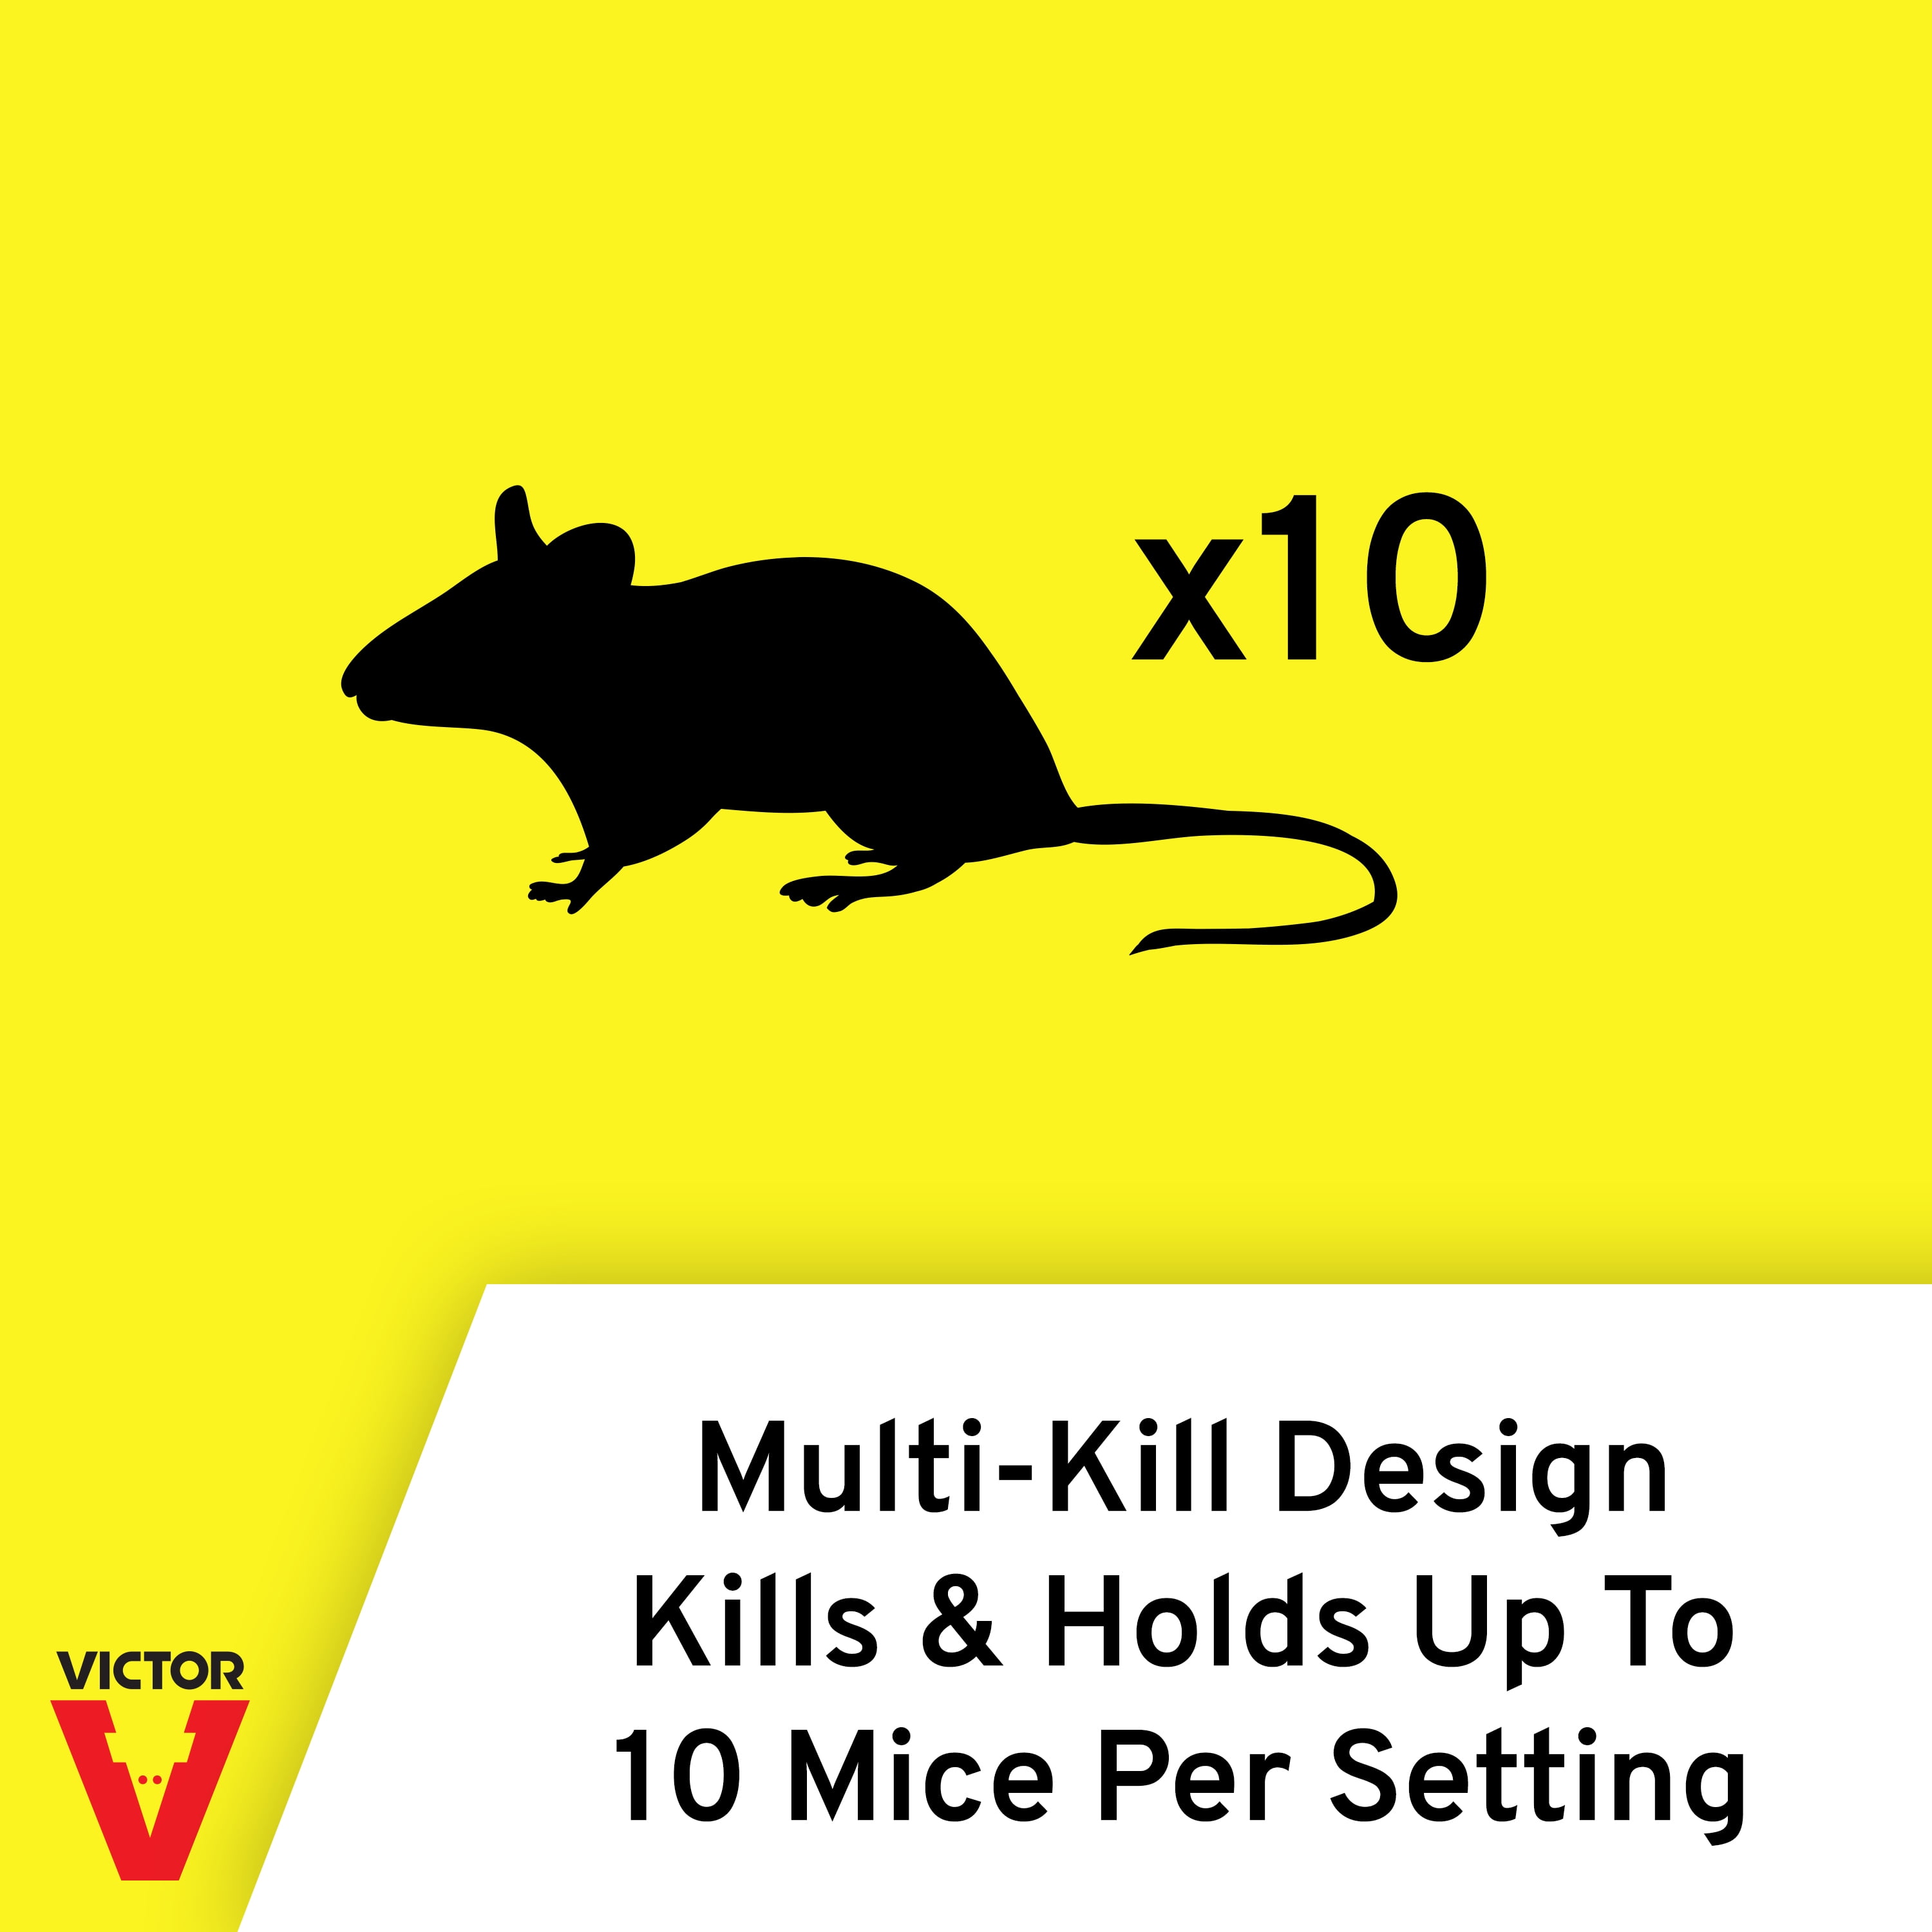 Mictrap ATE111140 Multi-Kill Electronic Mouse Trap